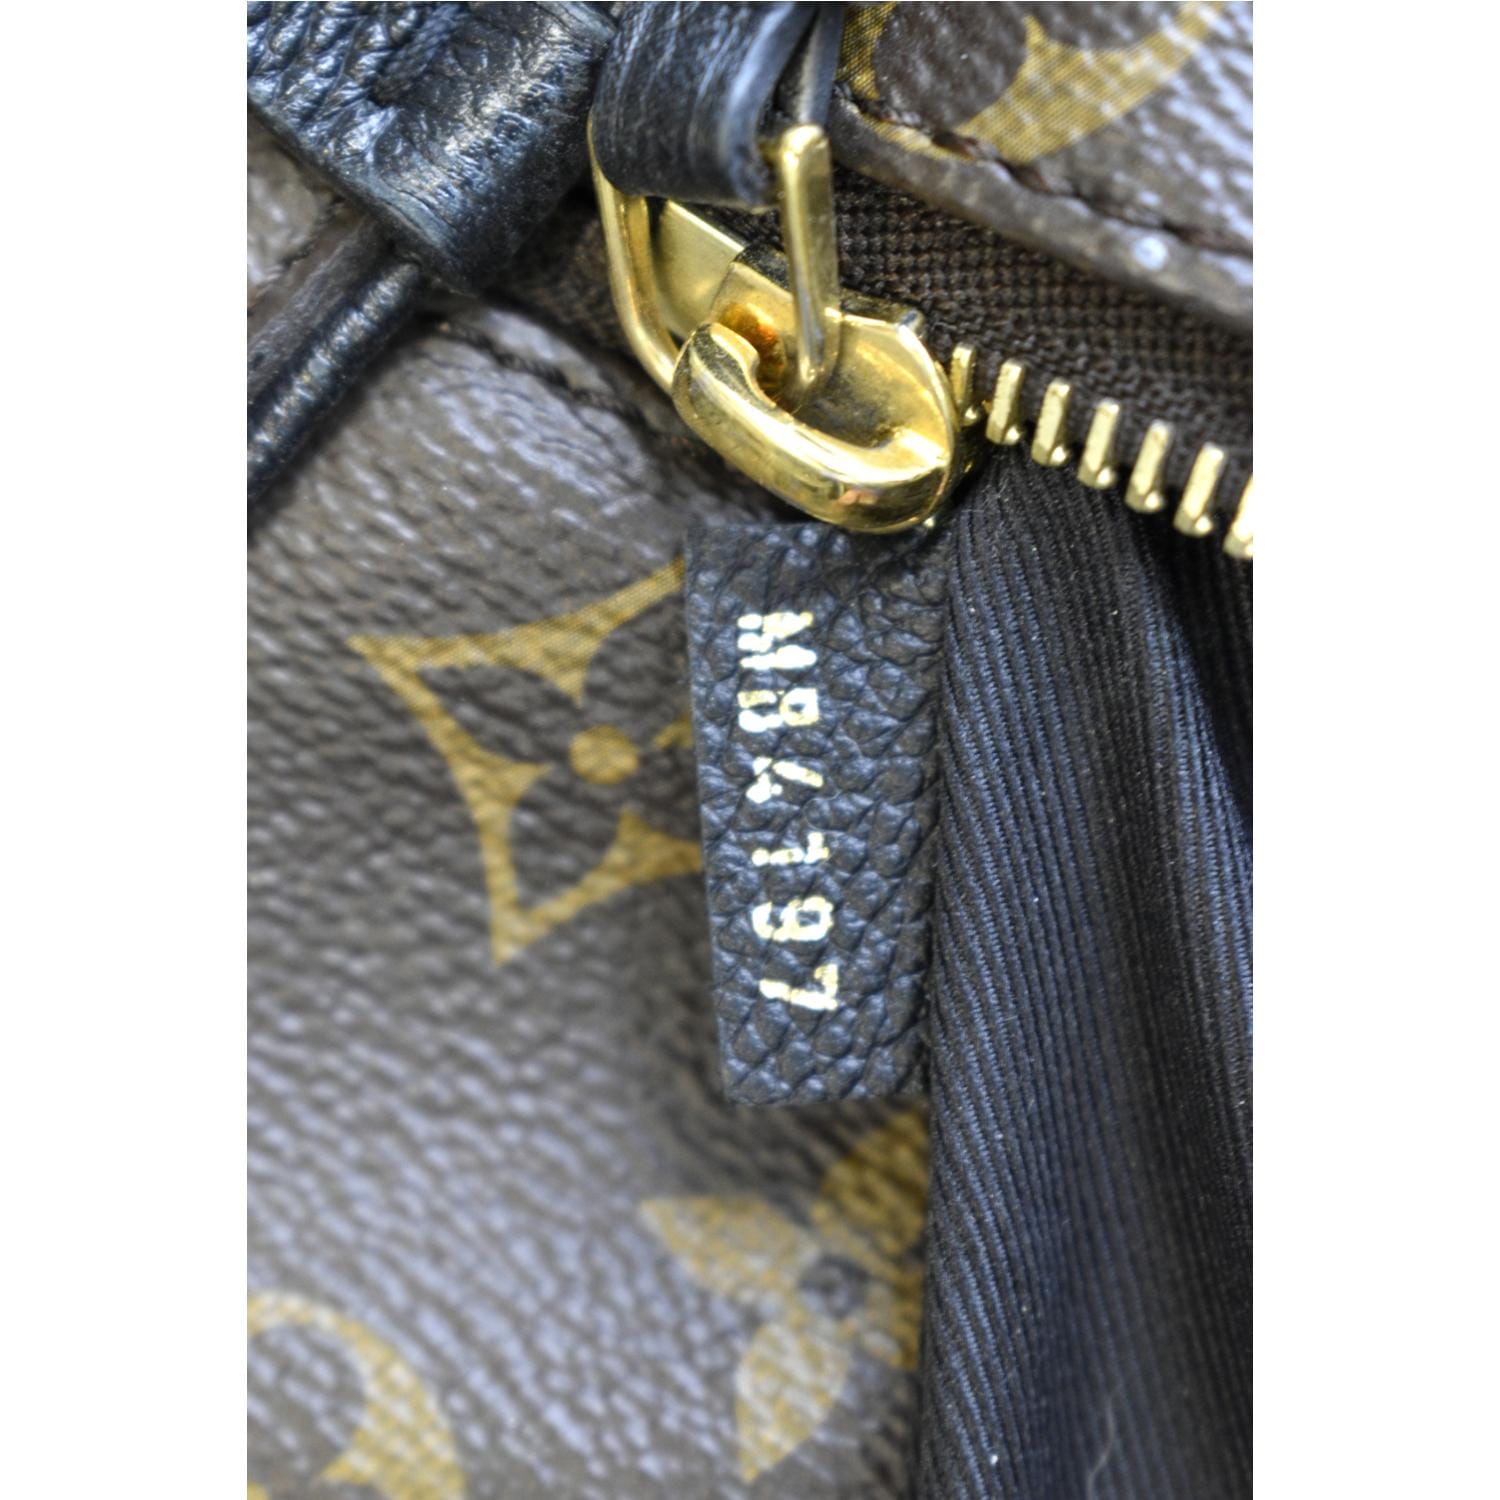 Tournelle  Cheap louis vuitton handbags, Louis vuitton, Vuitton